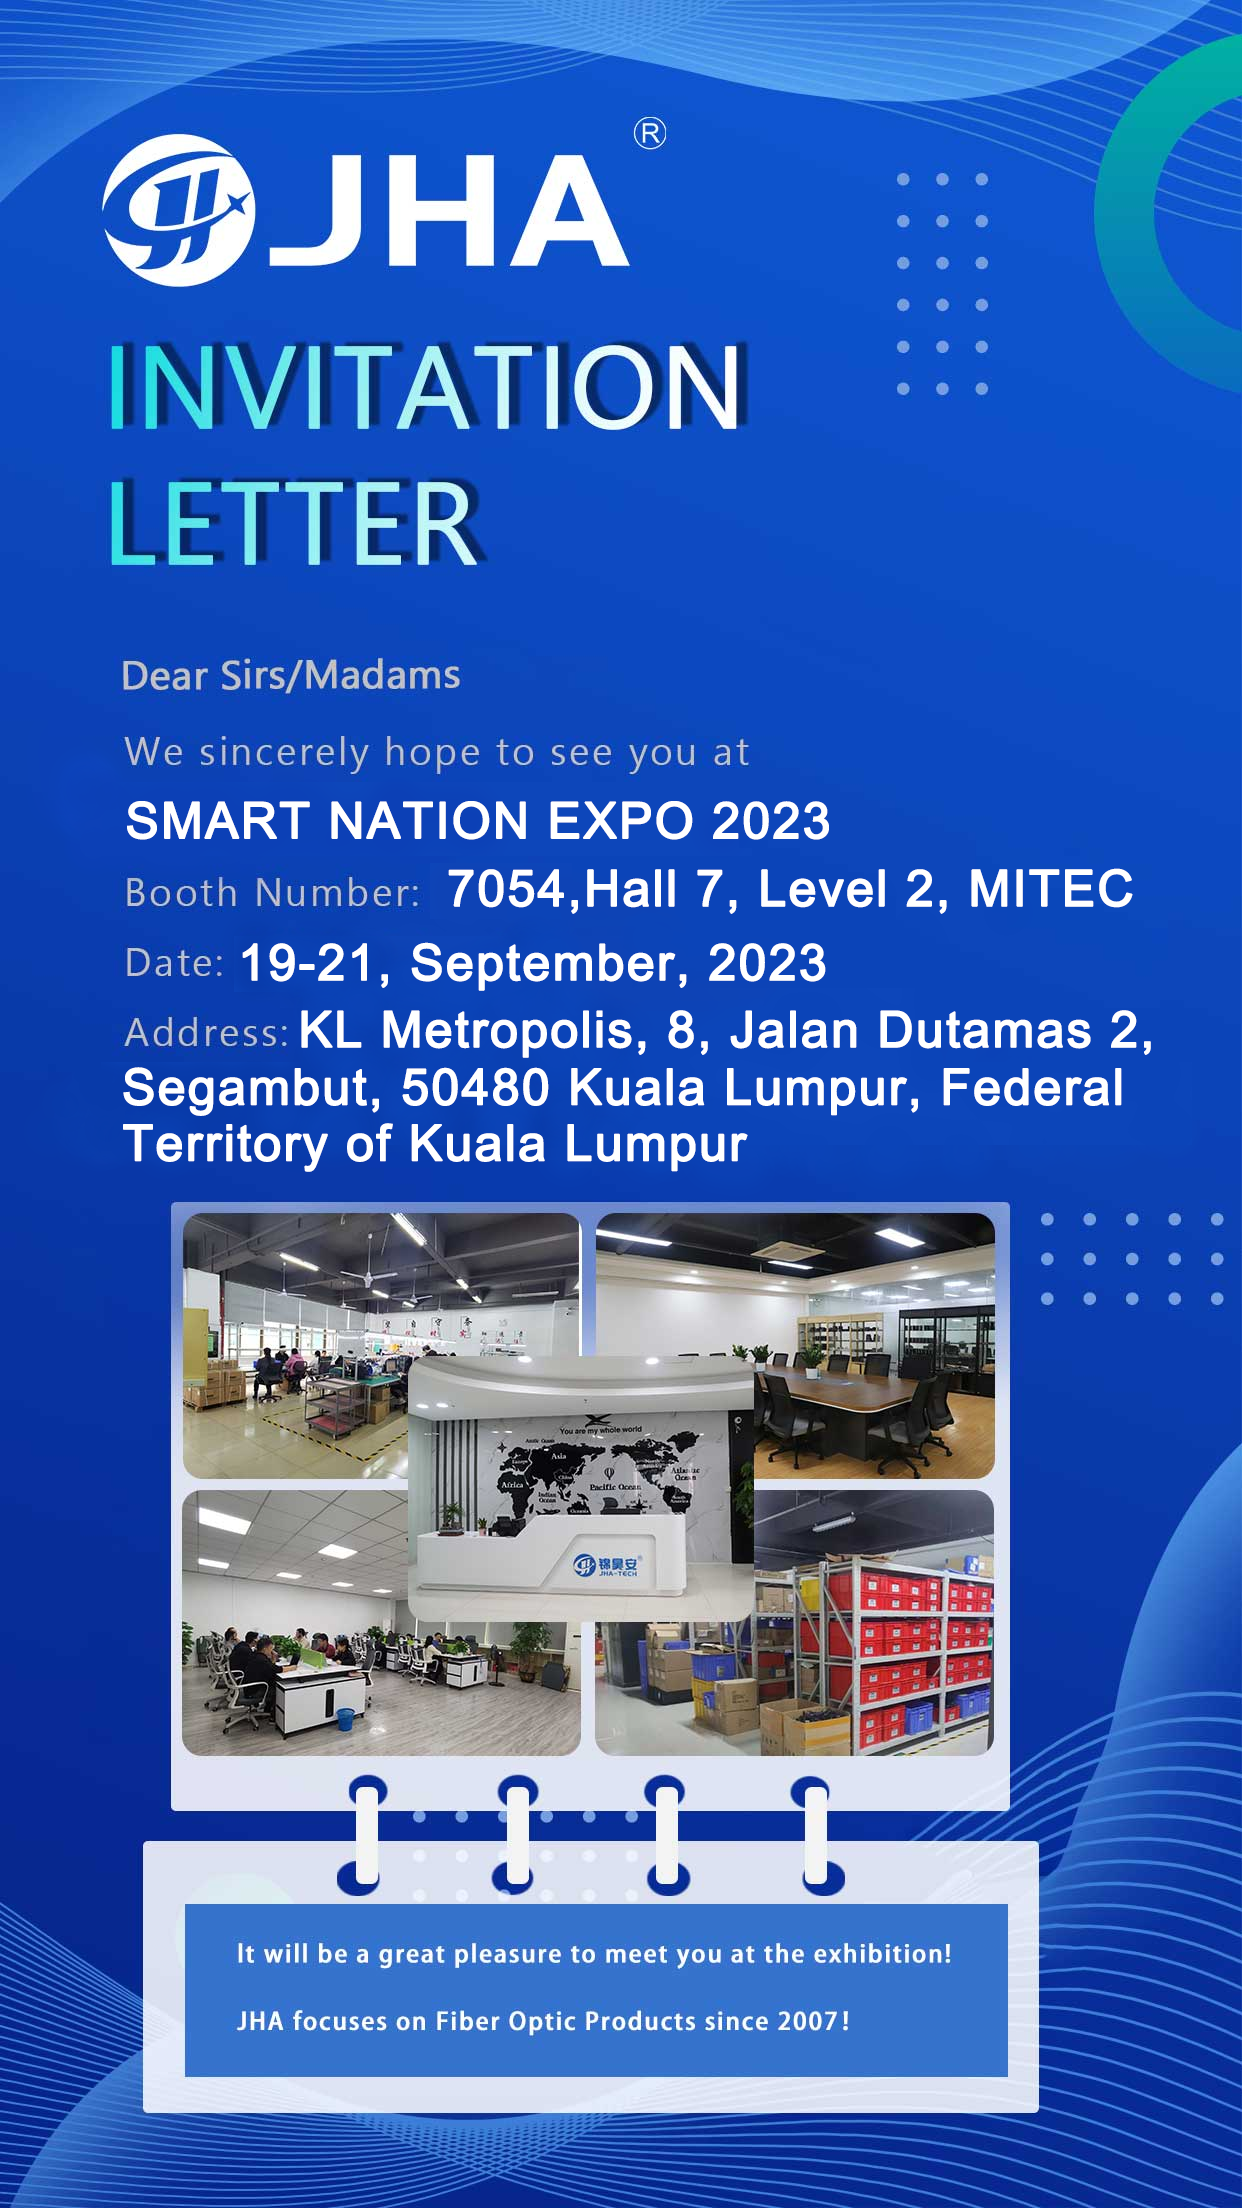 Ikus gaitezen SMART NATION EXPO 2023-n